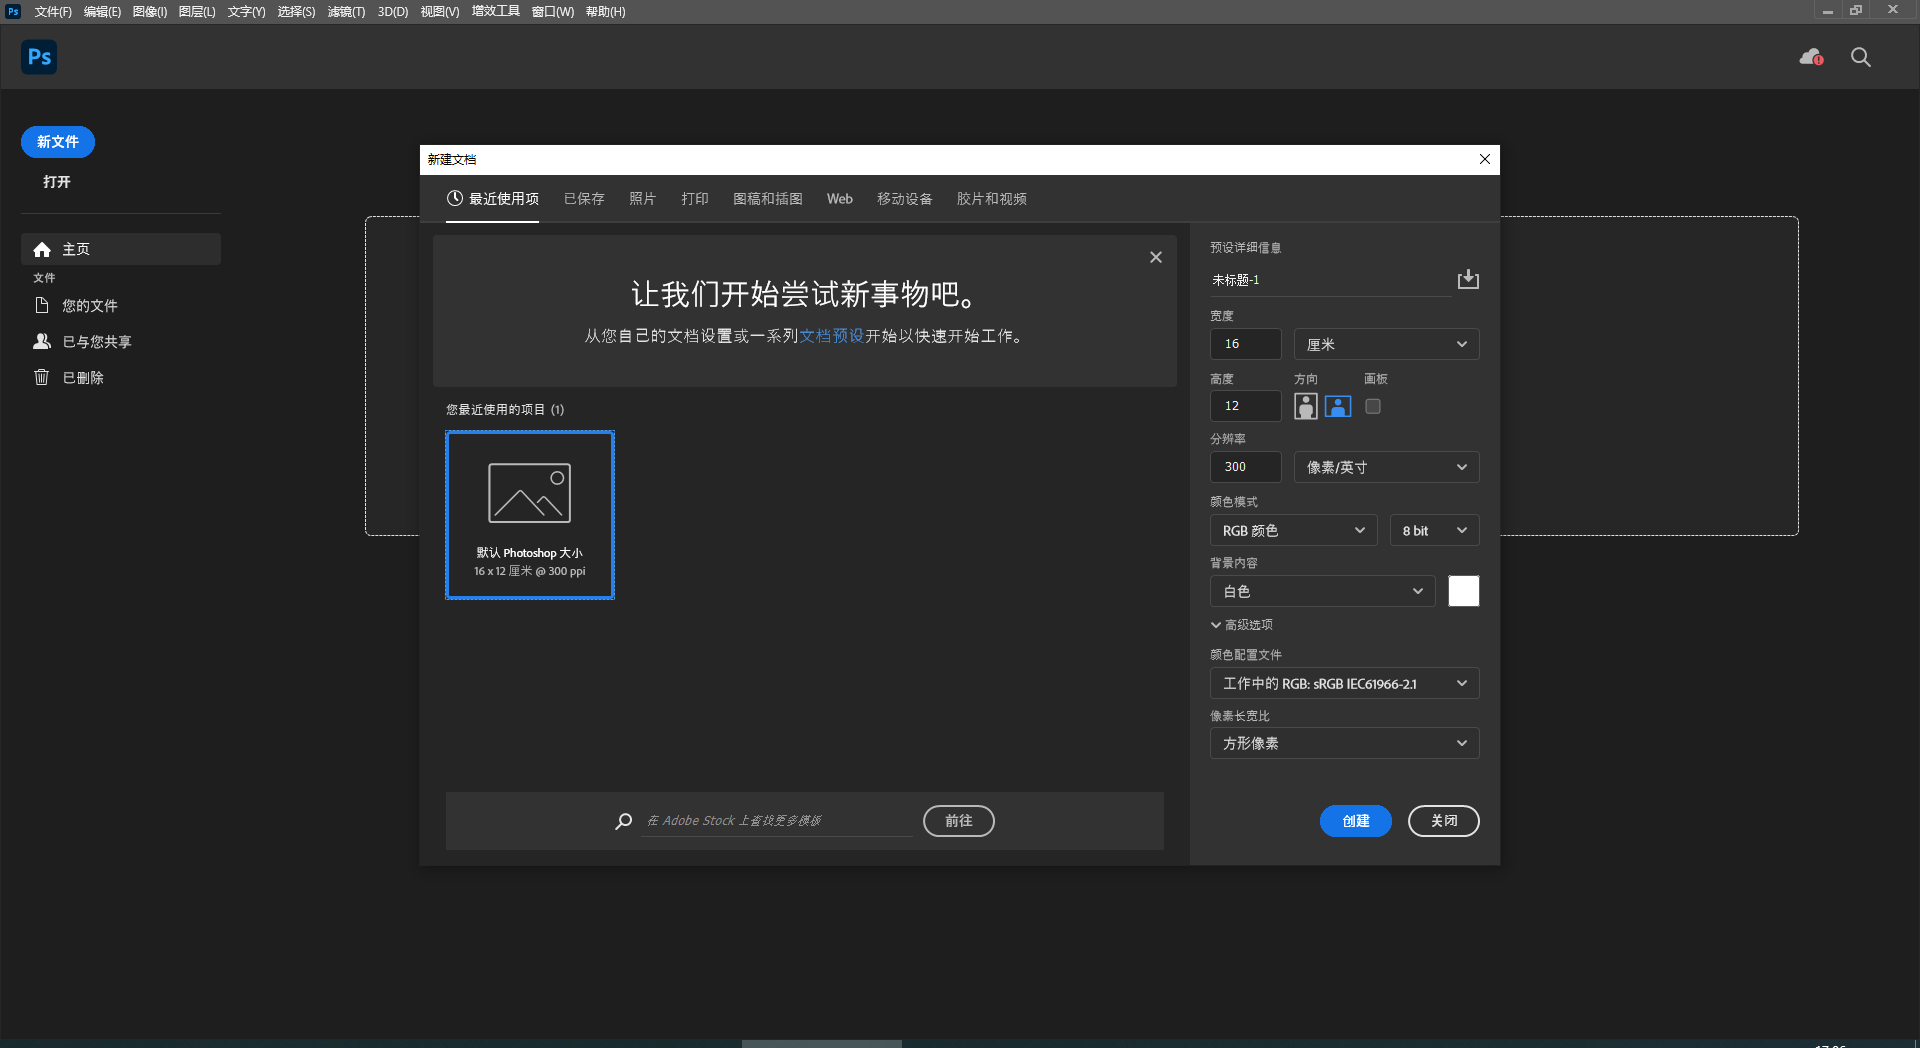 Adobe Photoshop 2024 v25.0官方正式最新免费破解版安装图文教程、破解注册方法